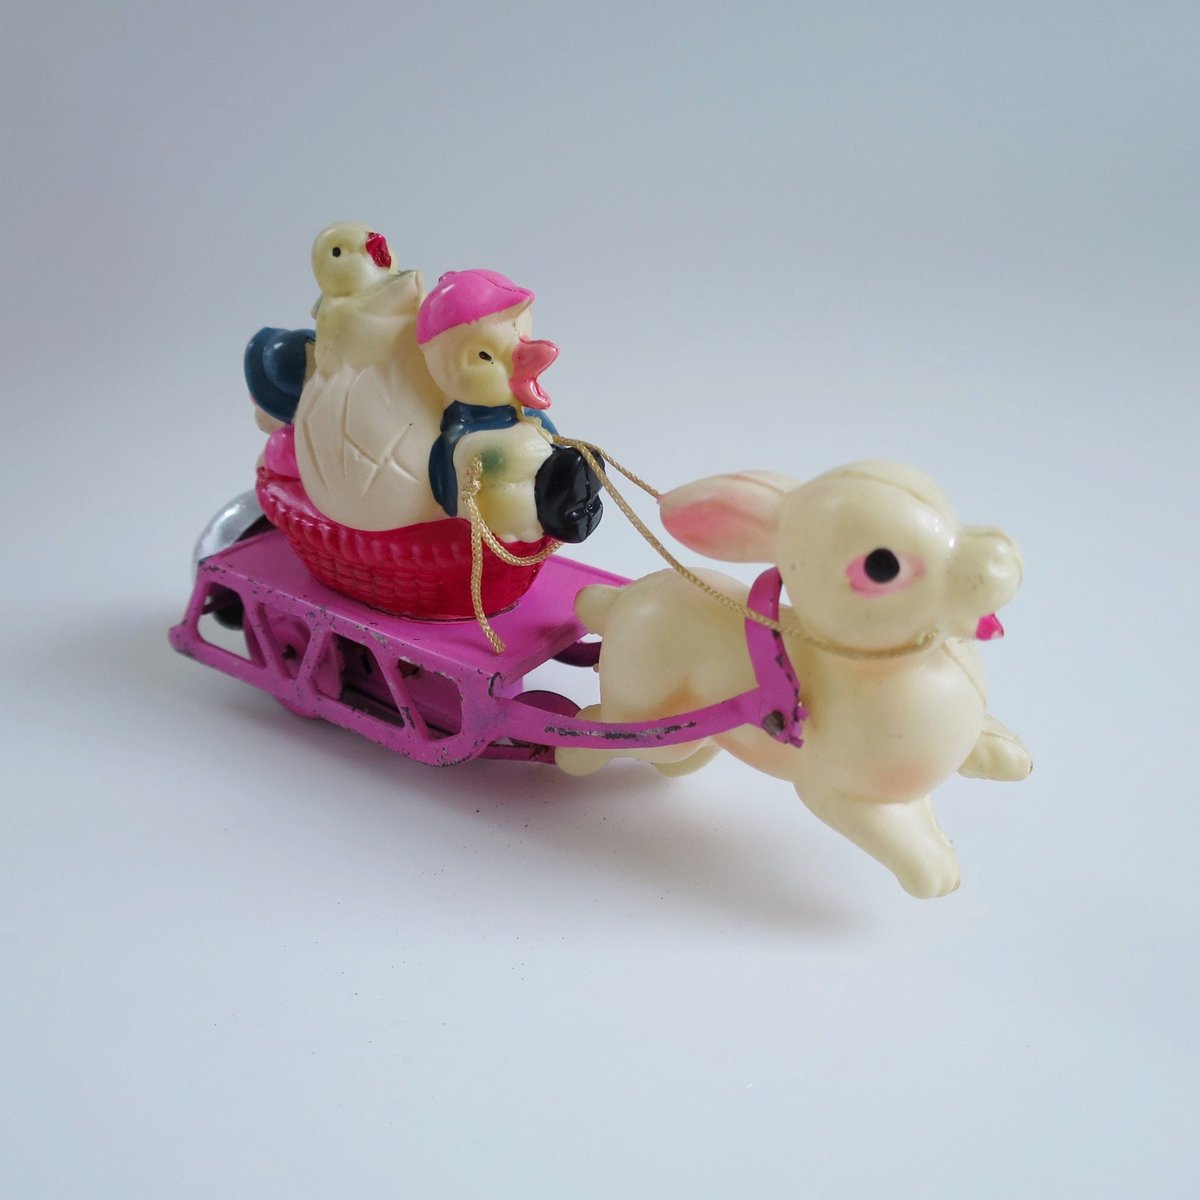 Vintage Wind Bunny Up Toy, Pink Gift Basket Filler, tuppu.net/31e463dd #VintageFun #SwirlingOrange11 #SMILEtt23 #Etsyteamunity